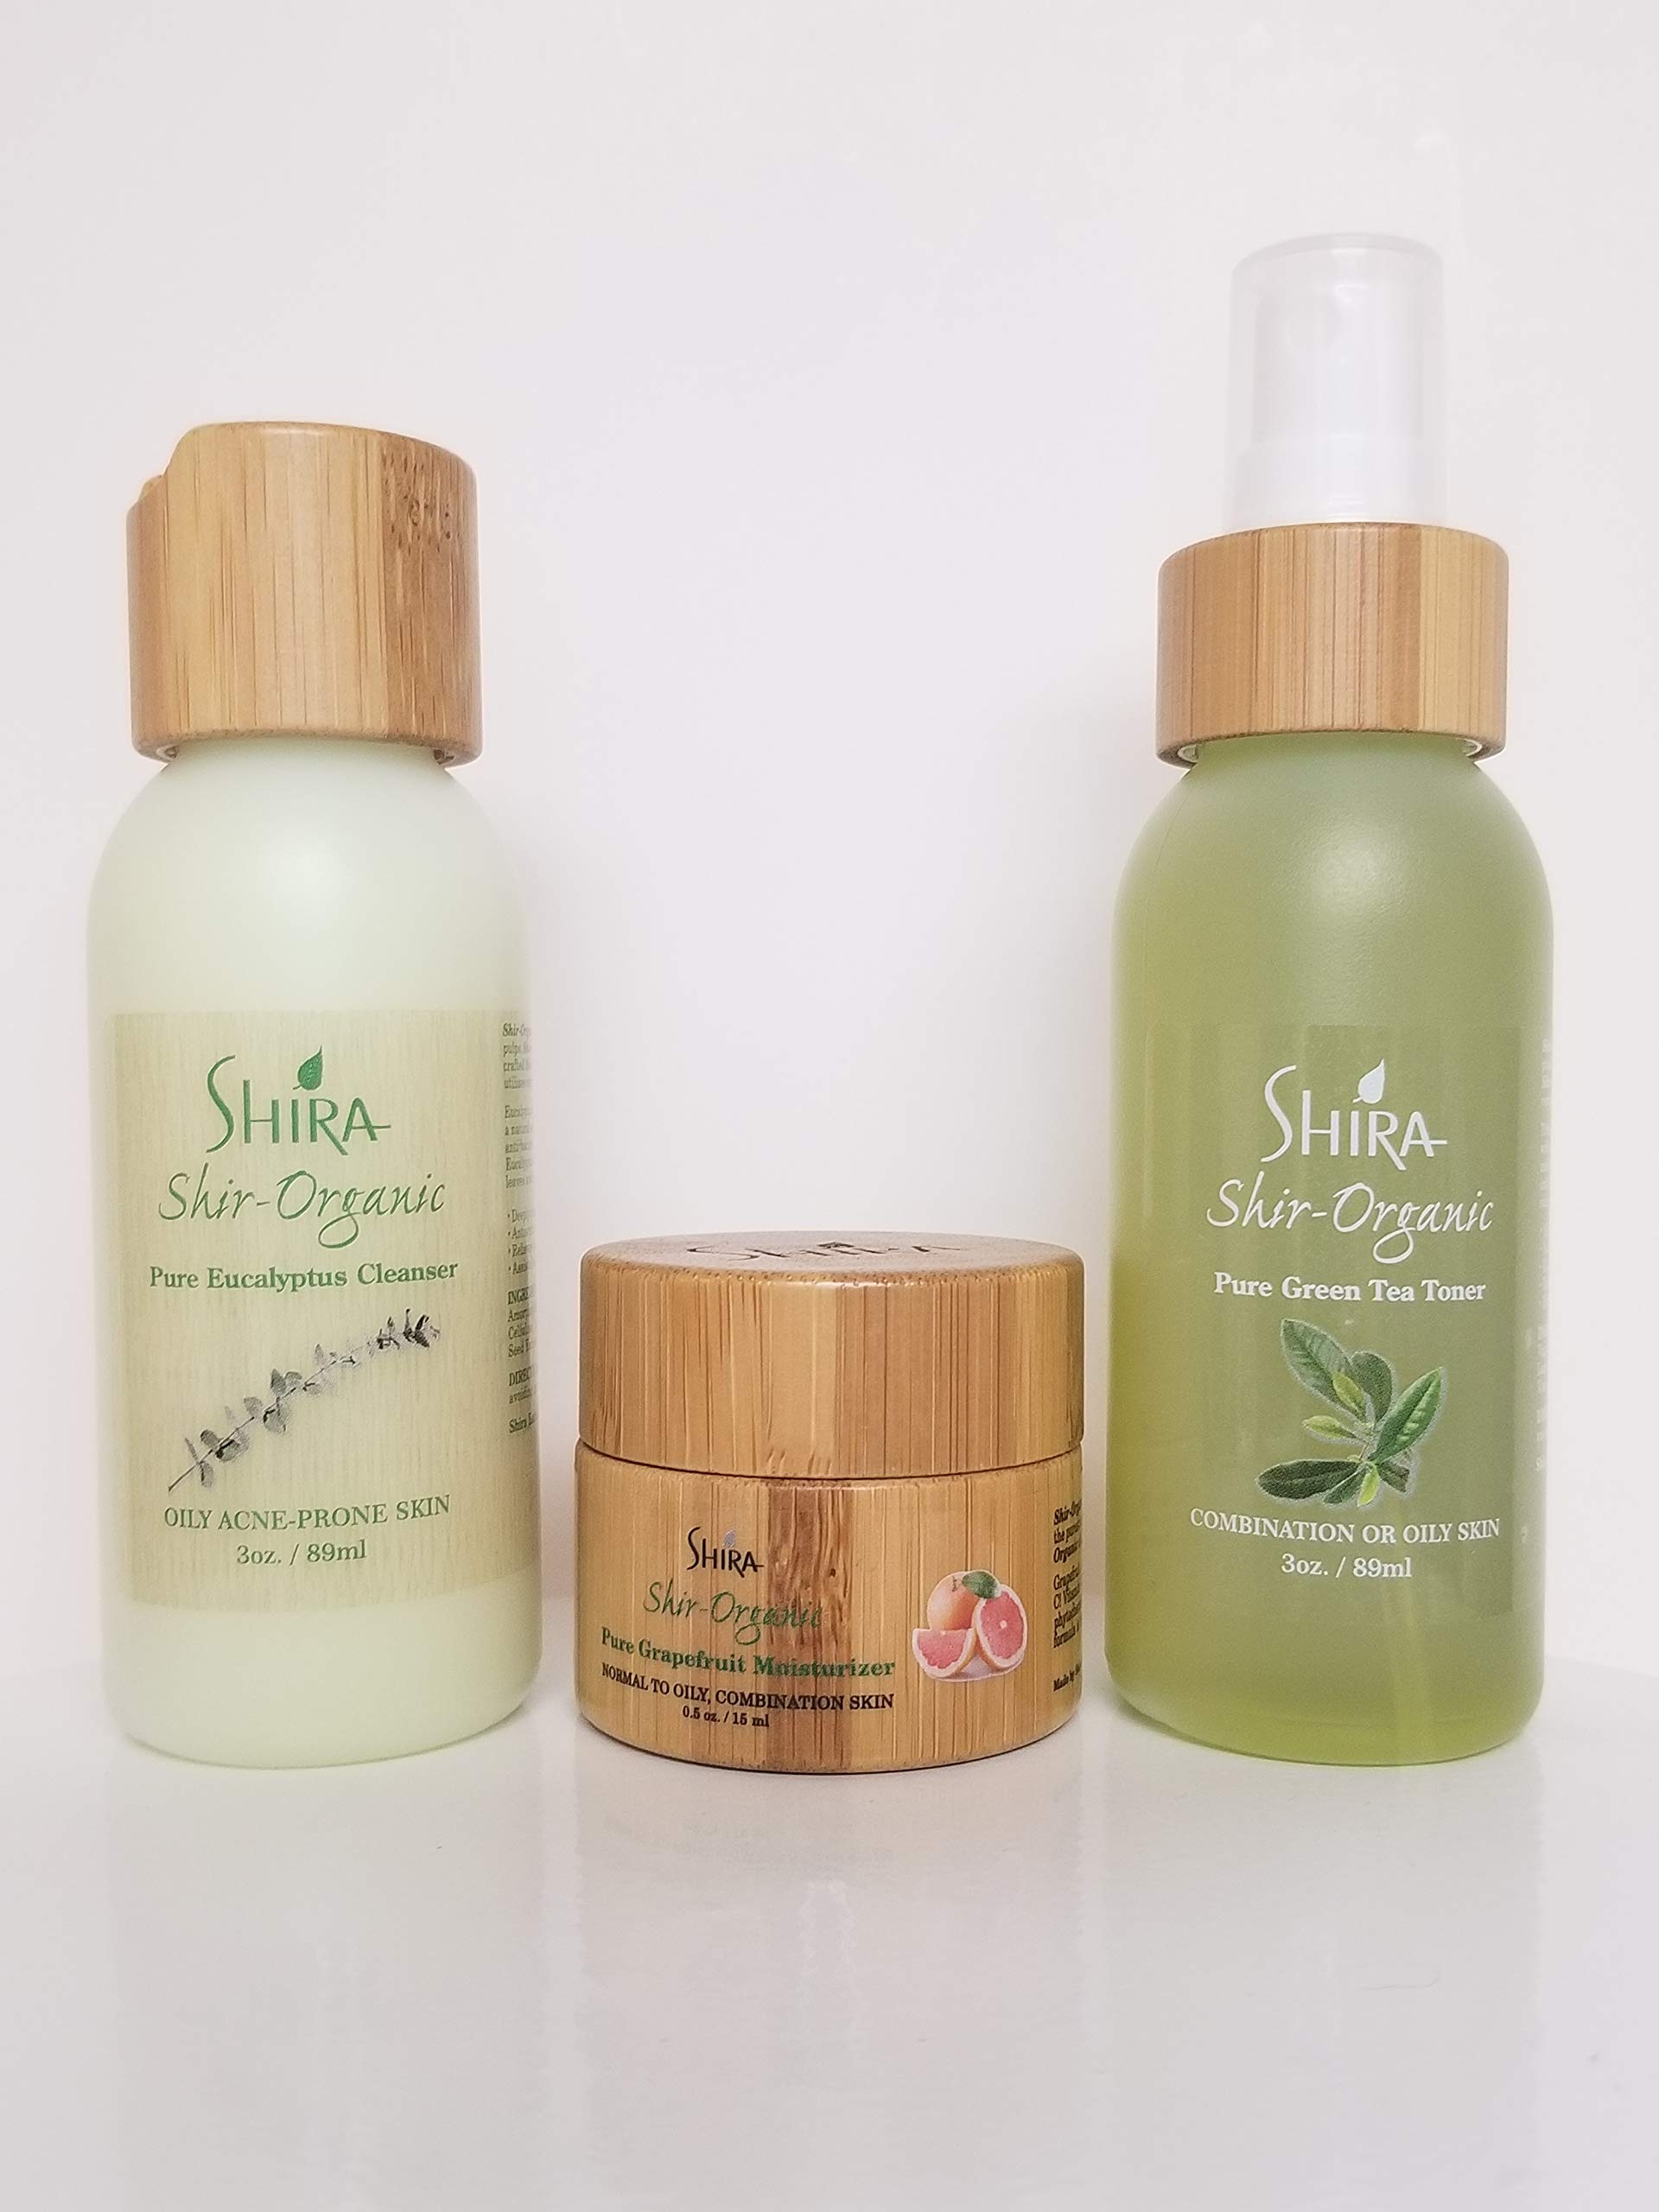 Shira Shir-Organic Travel Trio for Normal to Oily Skin - Eucalyptus Cleanser, Green Tea Toner & Grapefruit Moisturizer)